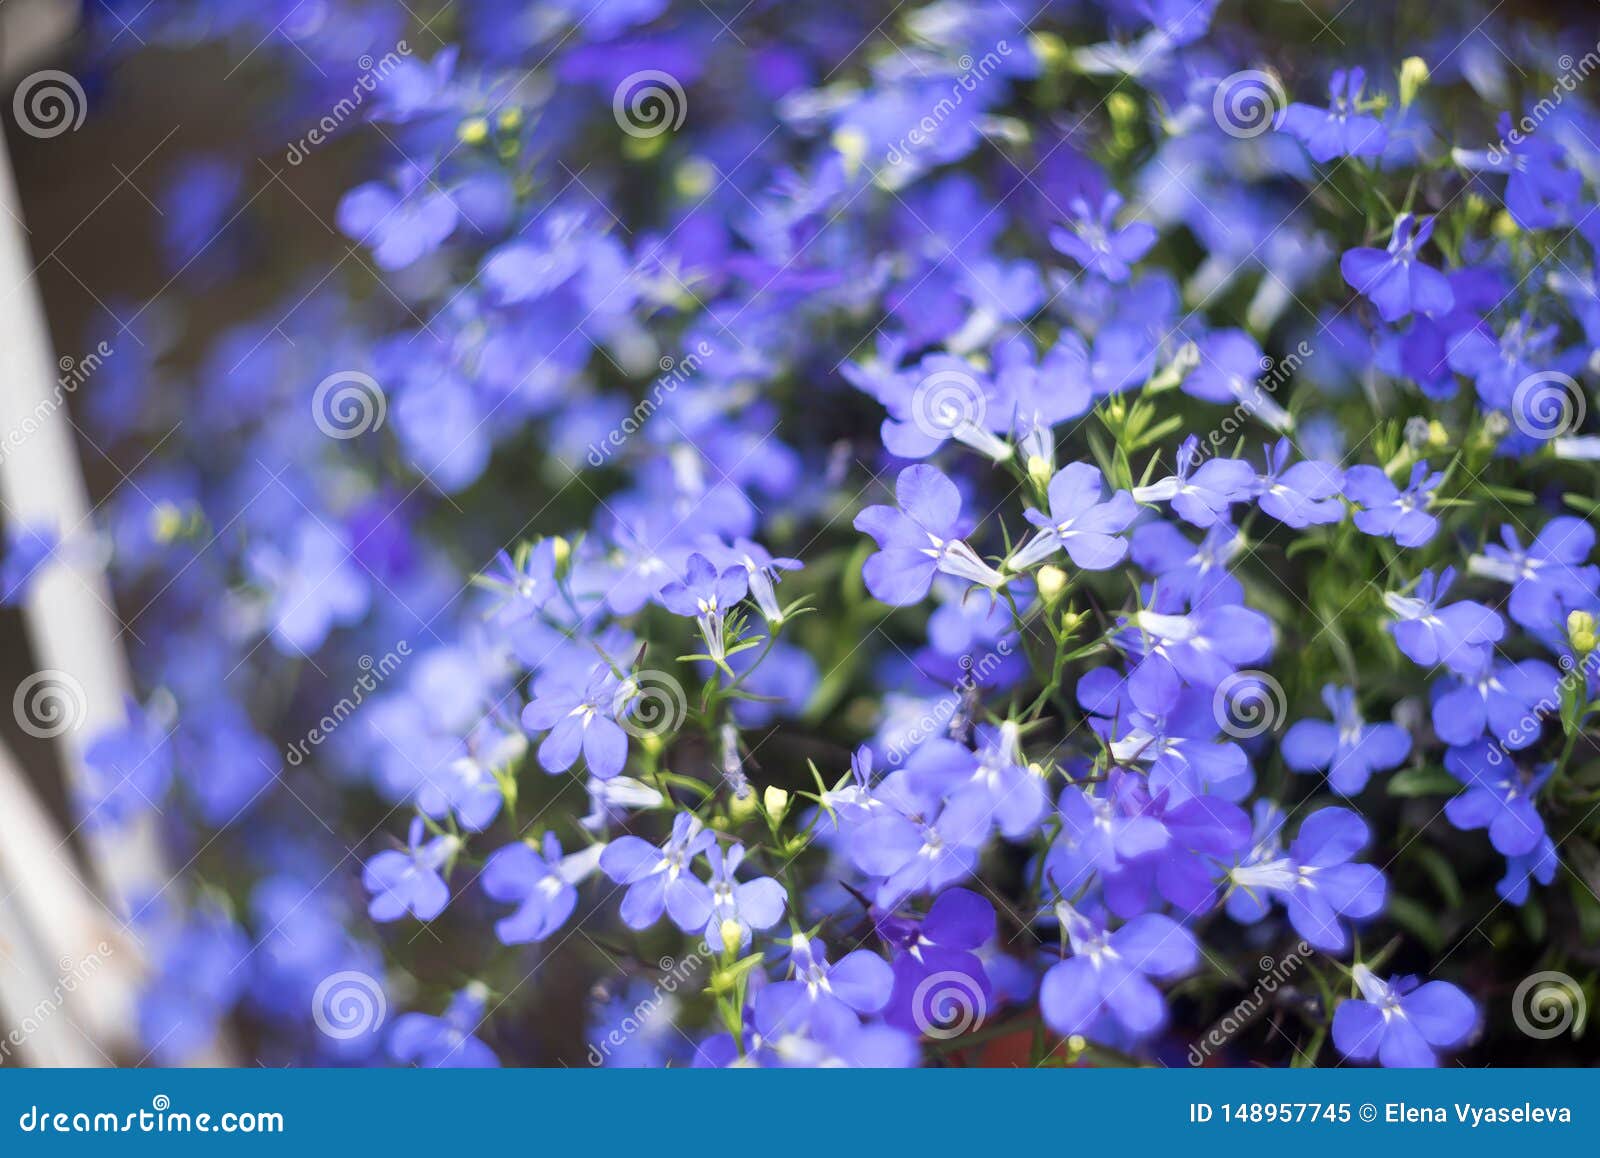 Blue Trailing Lobelia Sapphire Flowers Or Edging Lobelia In Garden